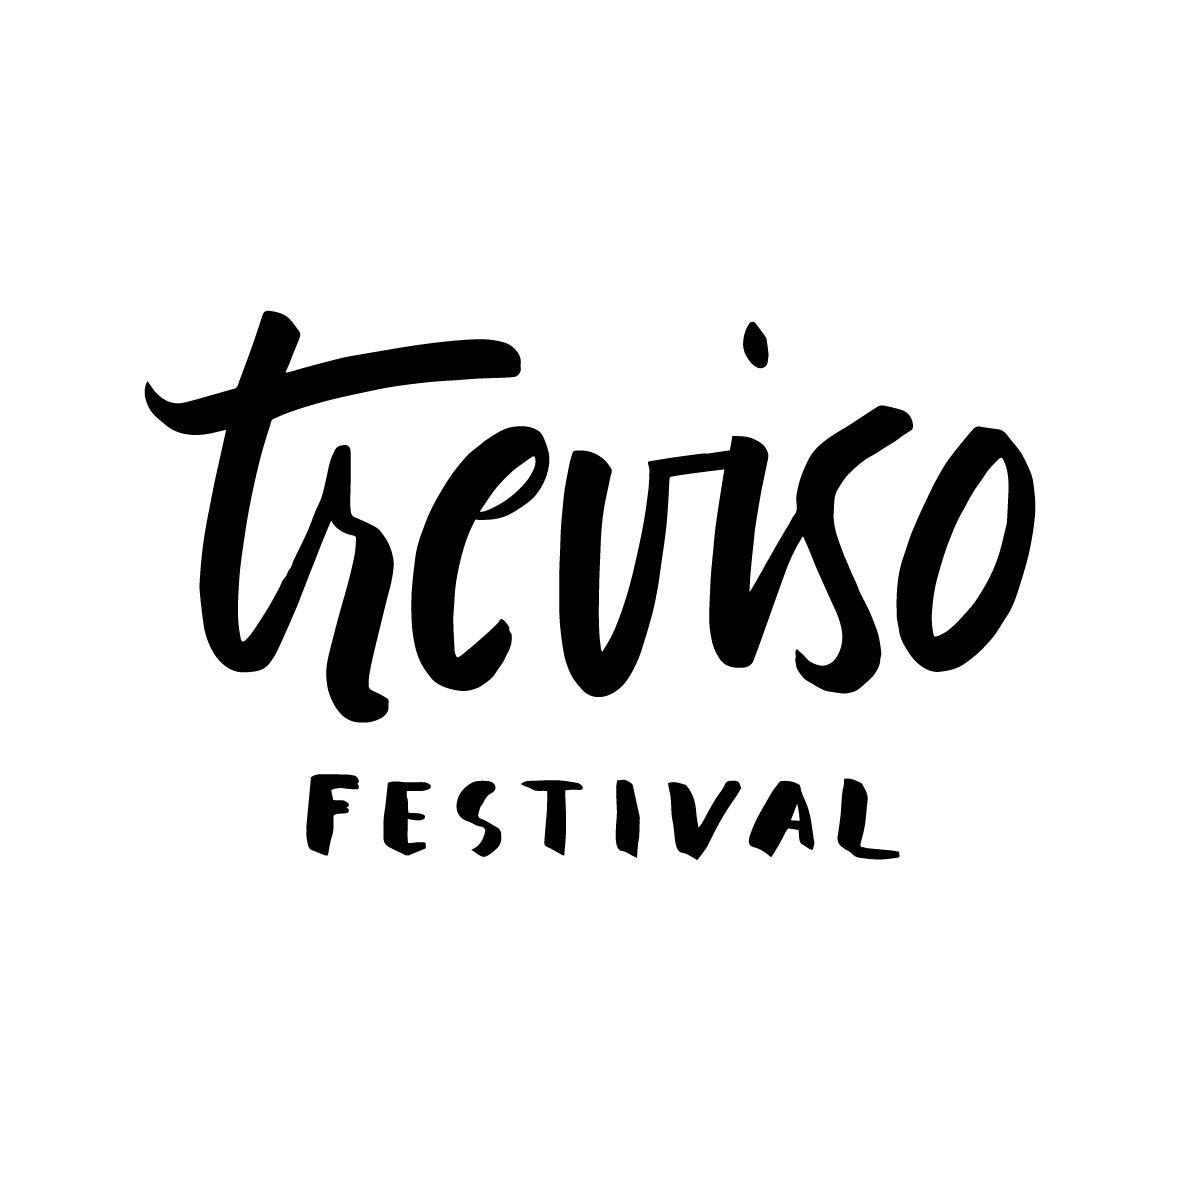 Treviso Logo - Treviso Festival